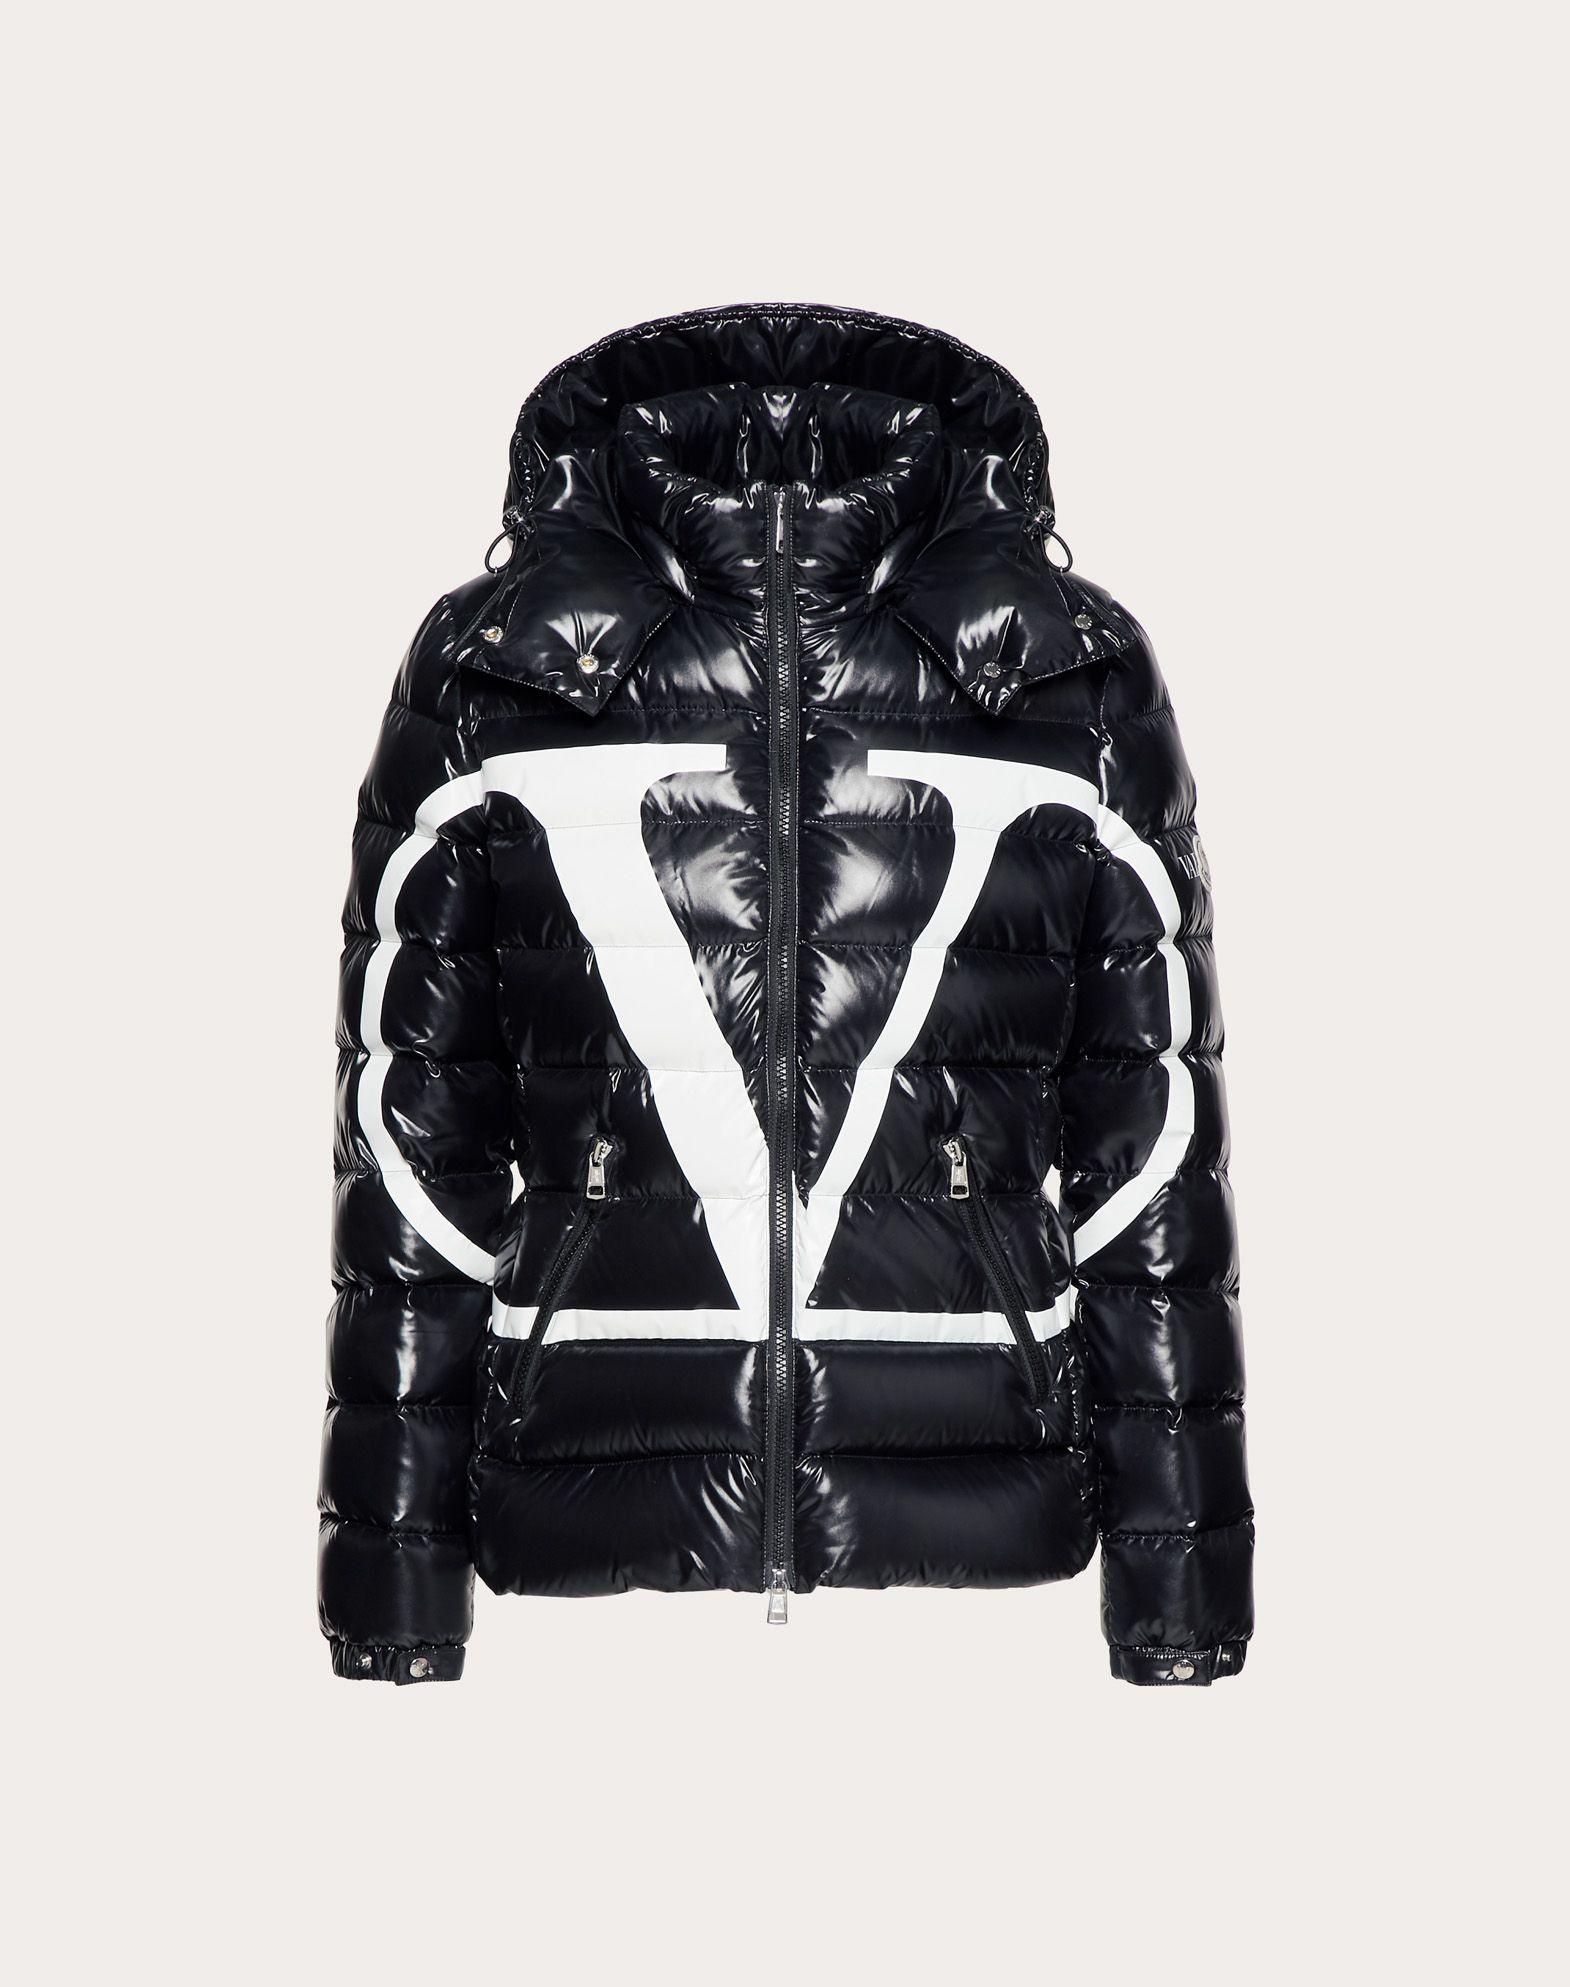 Valentino X Moncler Coat Flash Sales, 51% OFF | www.chine-magazine.com